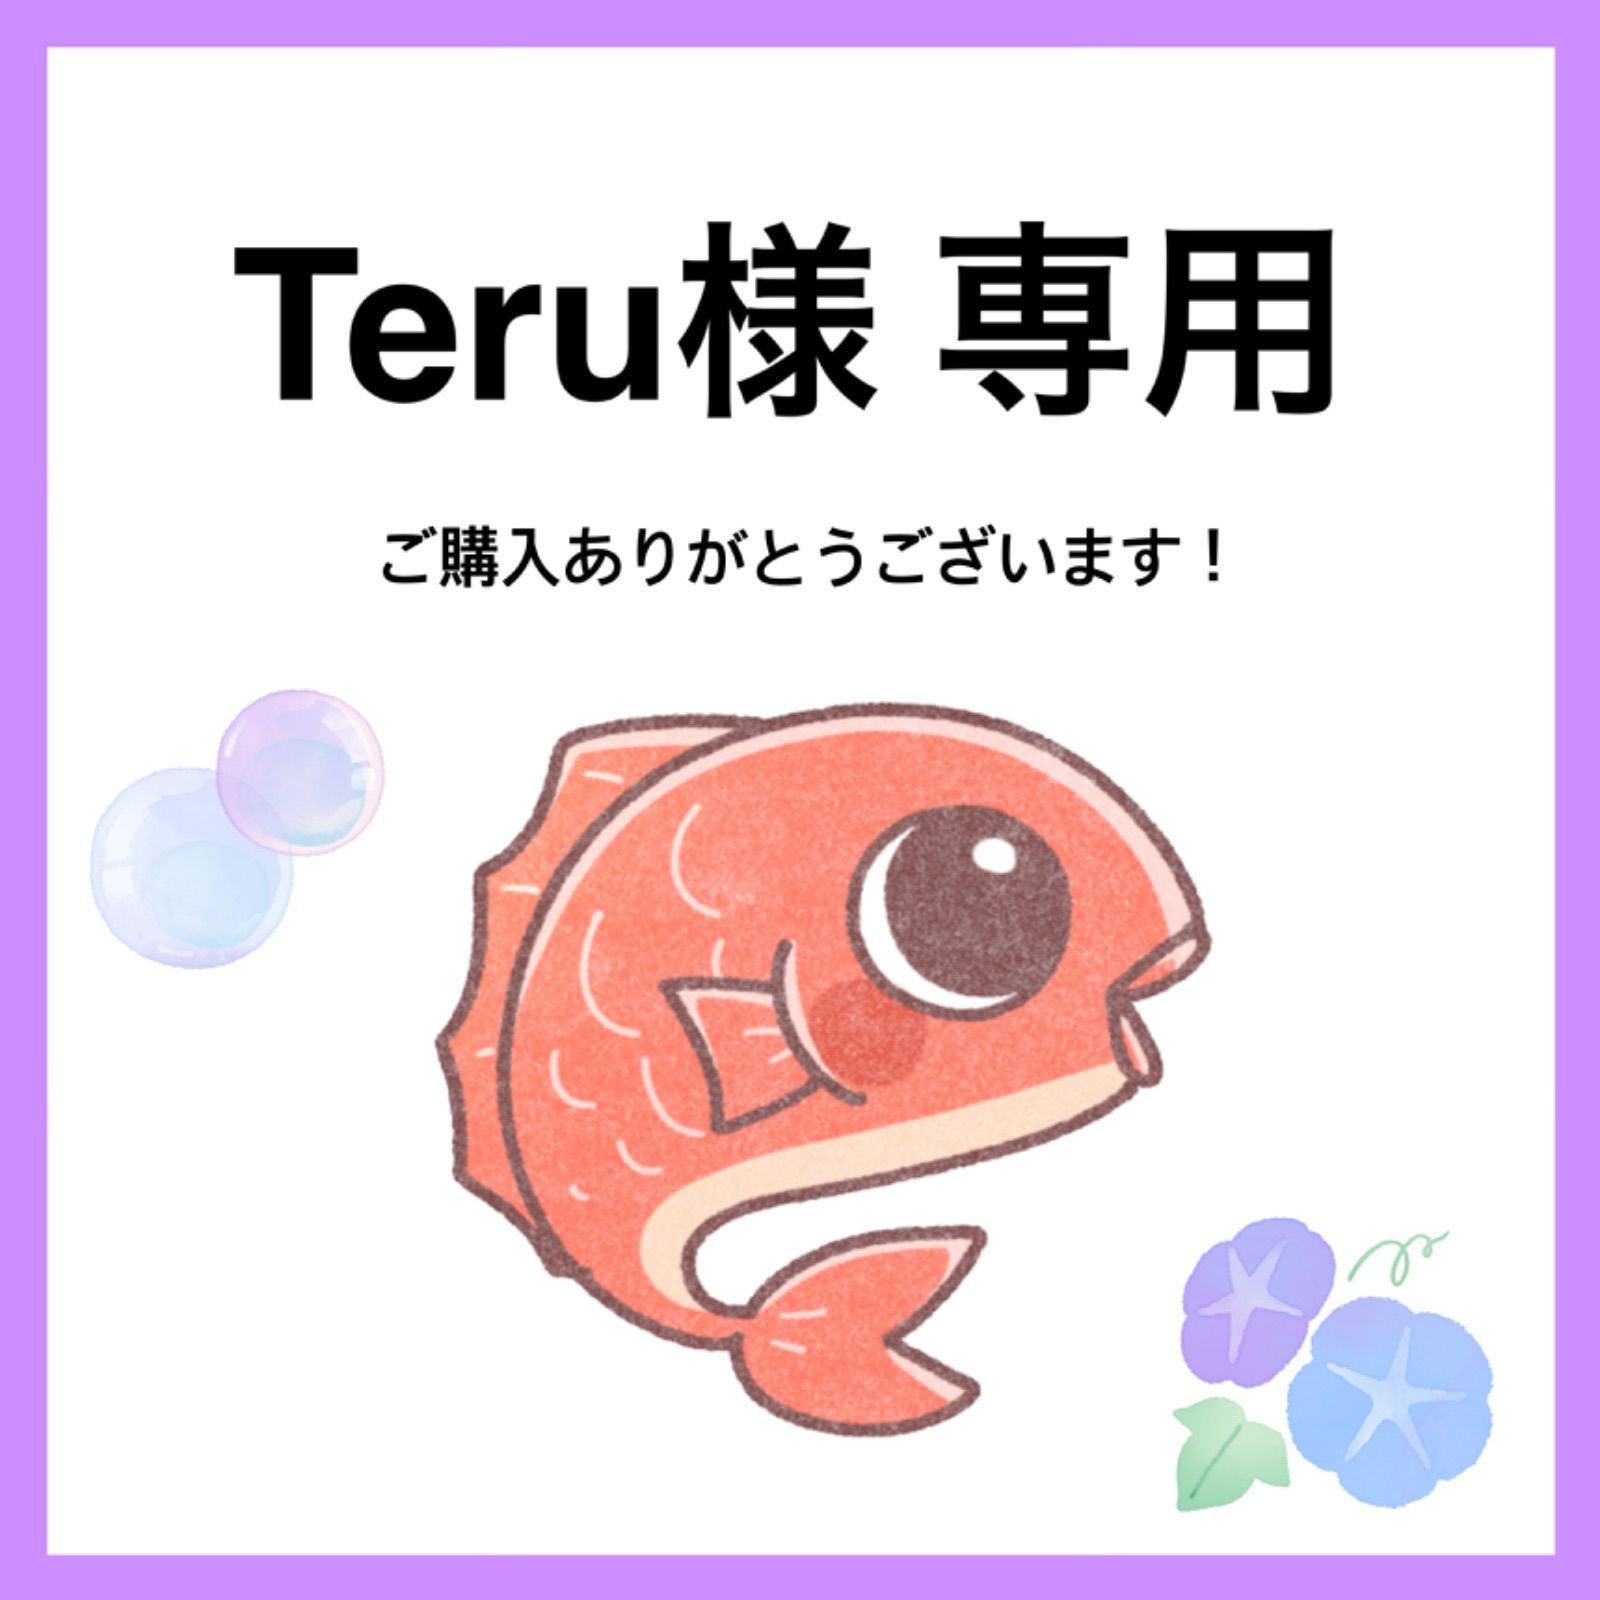 Teru様 専用ページ タイラバ タングステン - フィッシングミニ - メルカリ